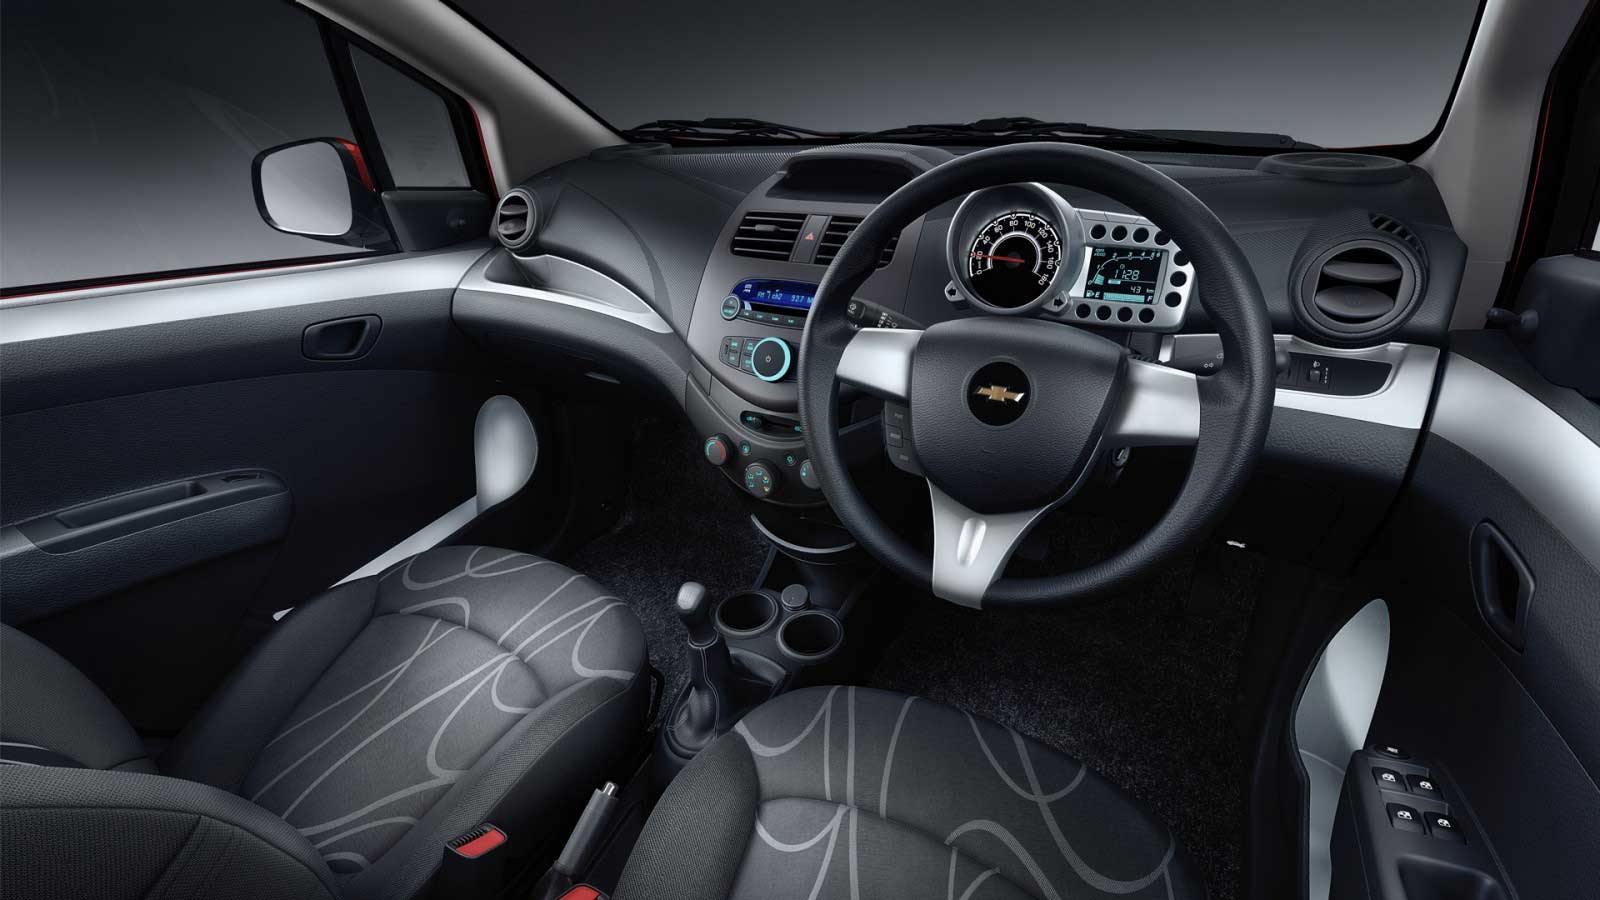 Chevrolet Beat Manchester Diesel Interior front view